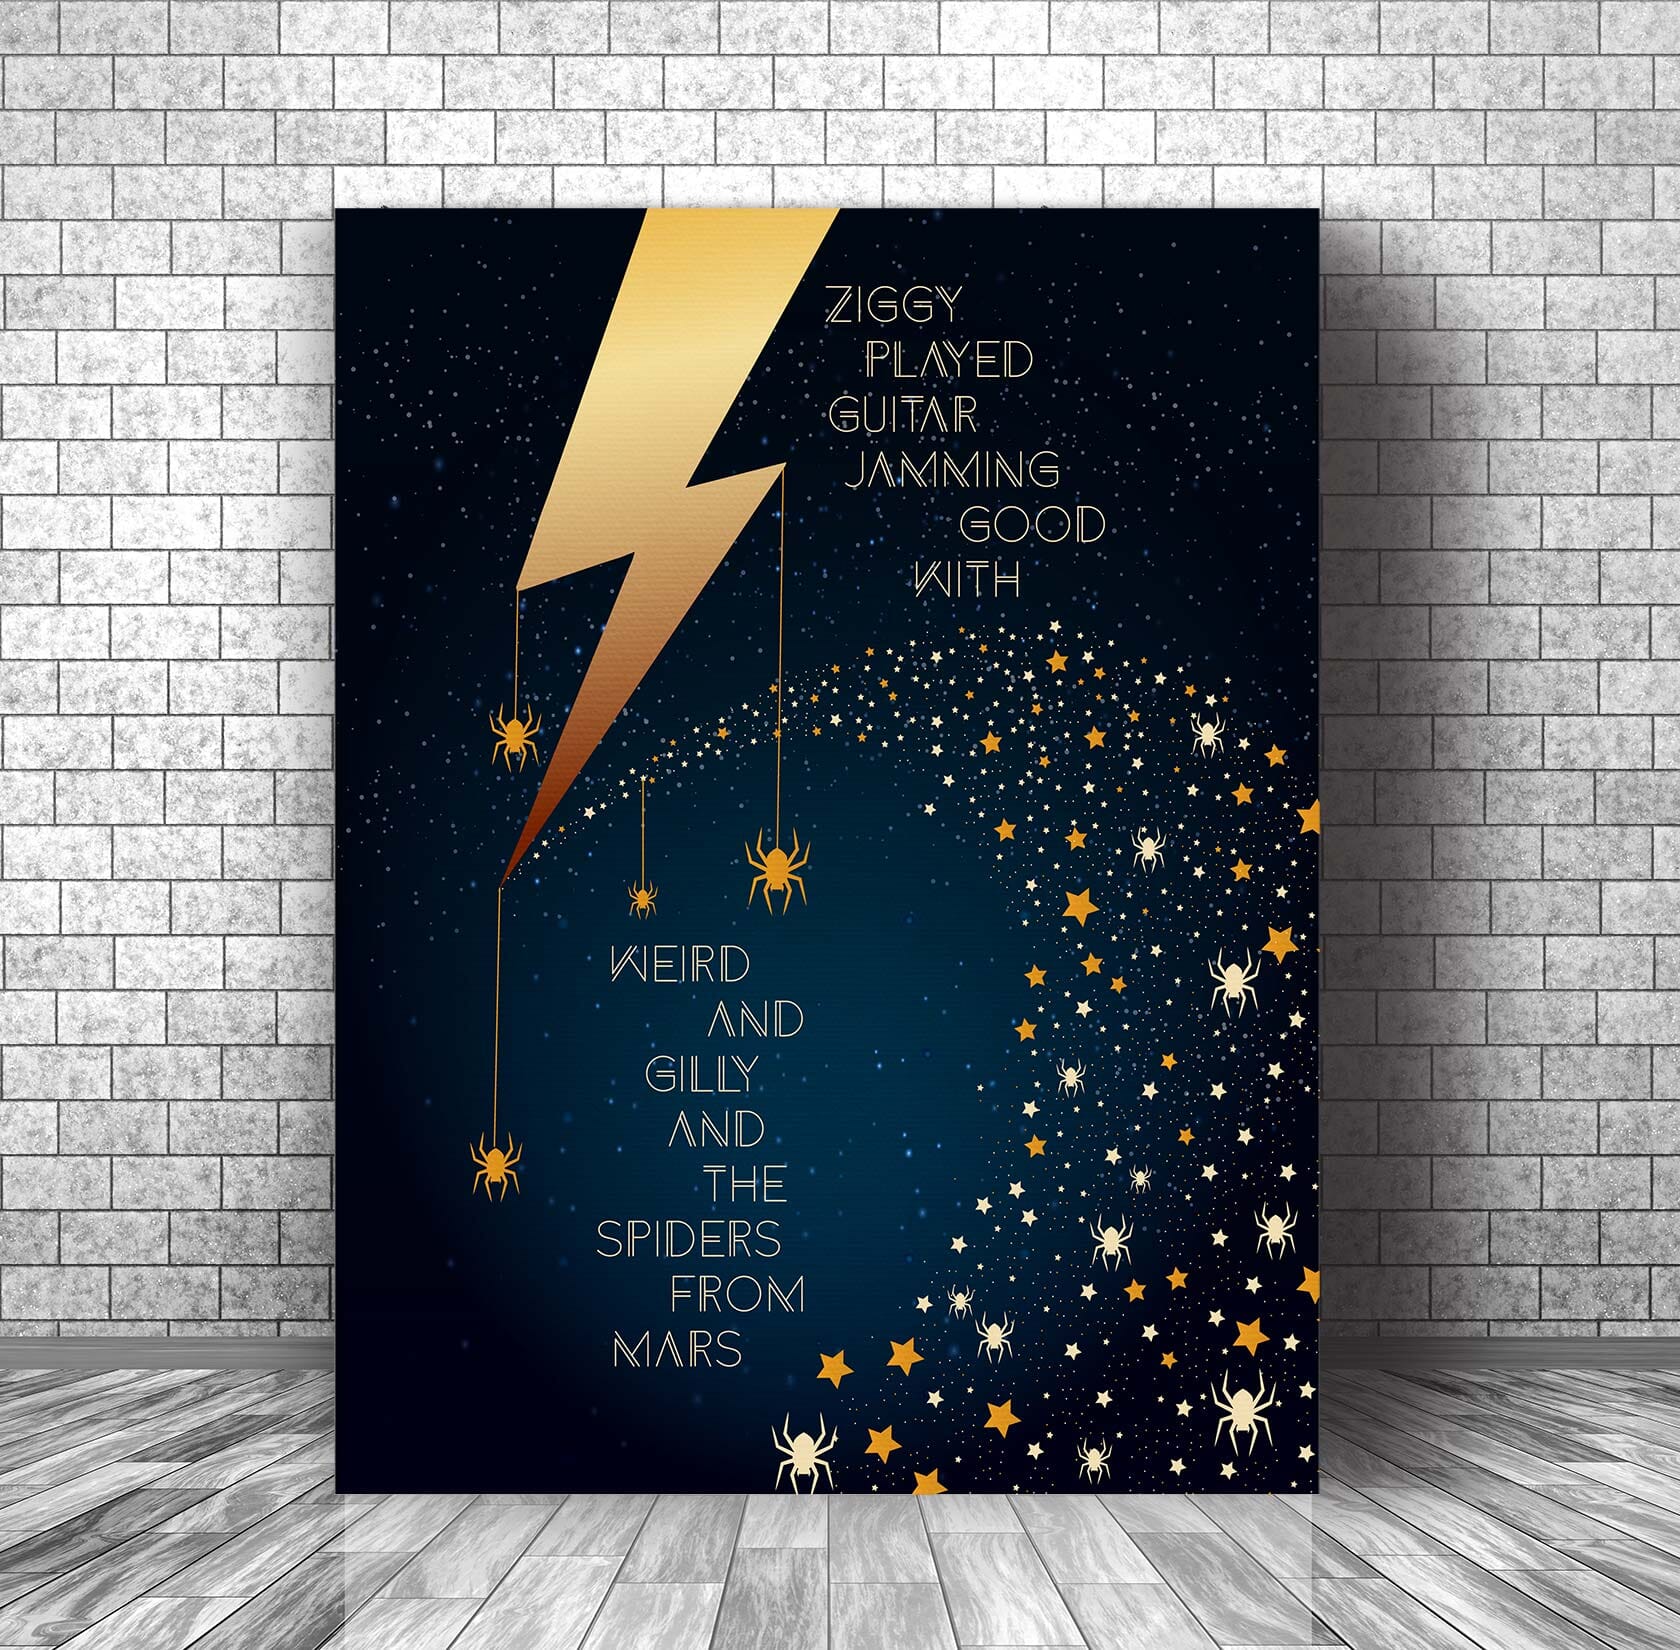 Ziggy Stardust by David Bowie - Song Lyric Visual Artwork Song Lyrics Art Song Lyrics Art 11x14 Canvas Wrap 